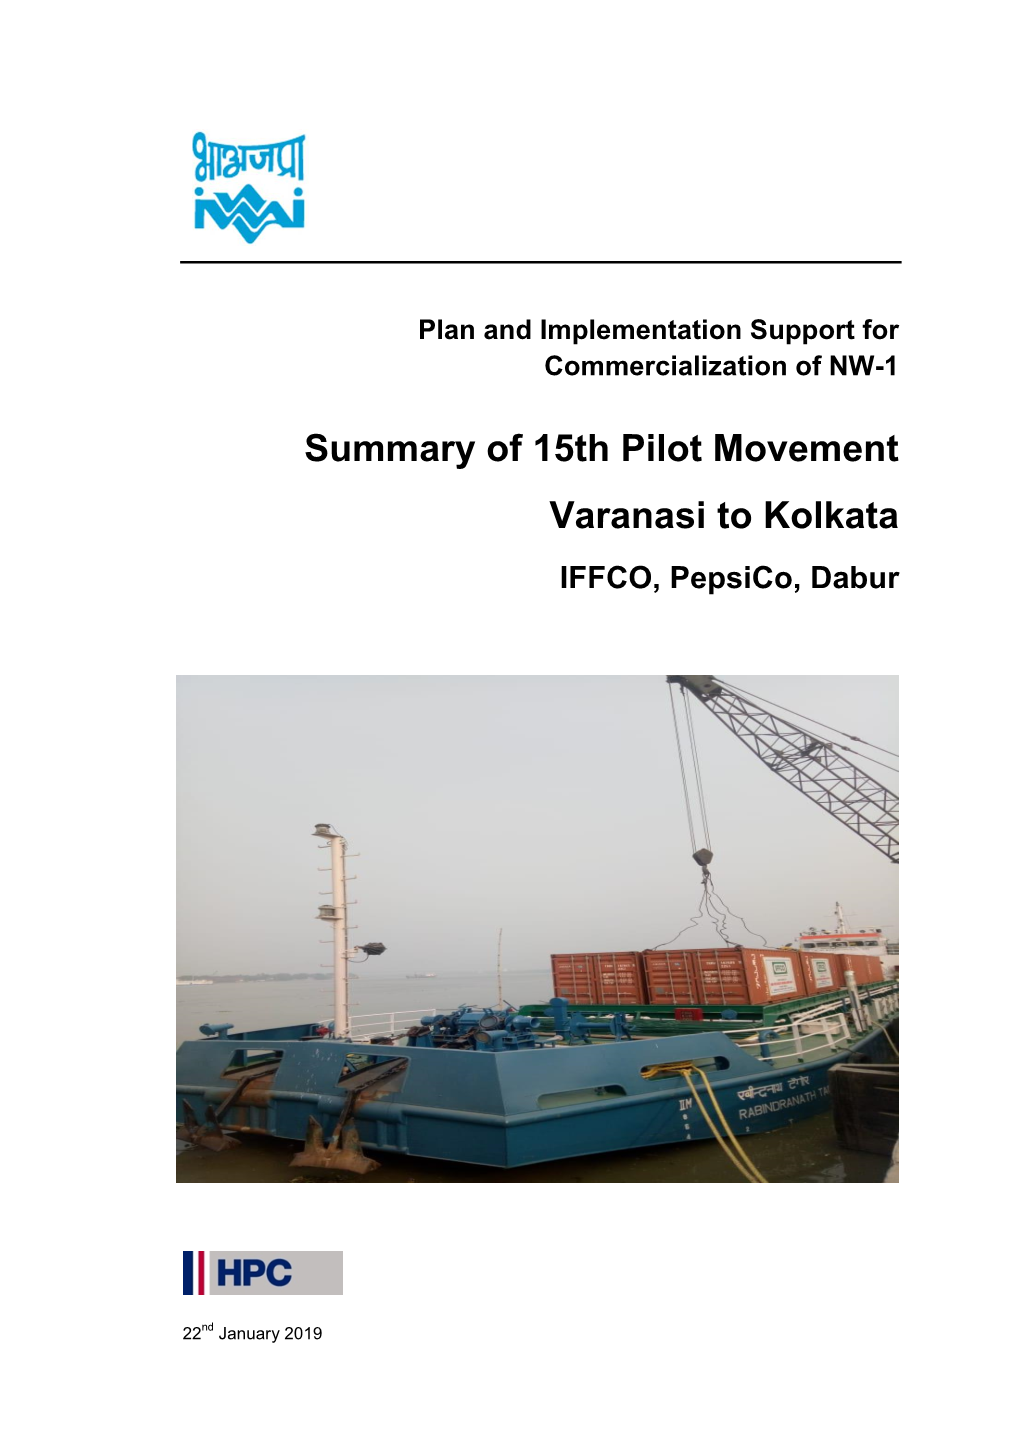 Summary of 15Th Pilot Movement Varanasi to Kolkata IFFCO, Pepsico, Dabur